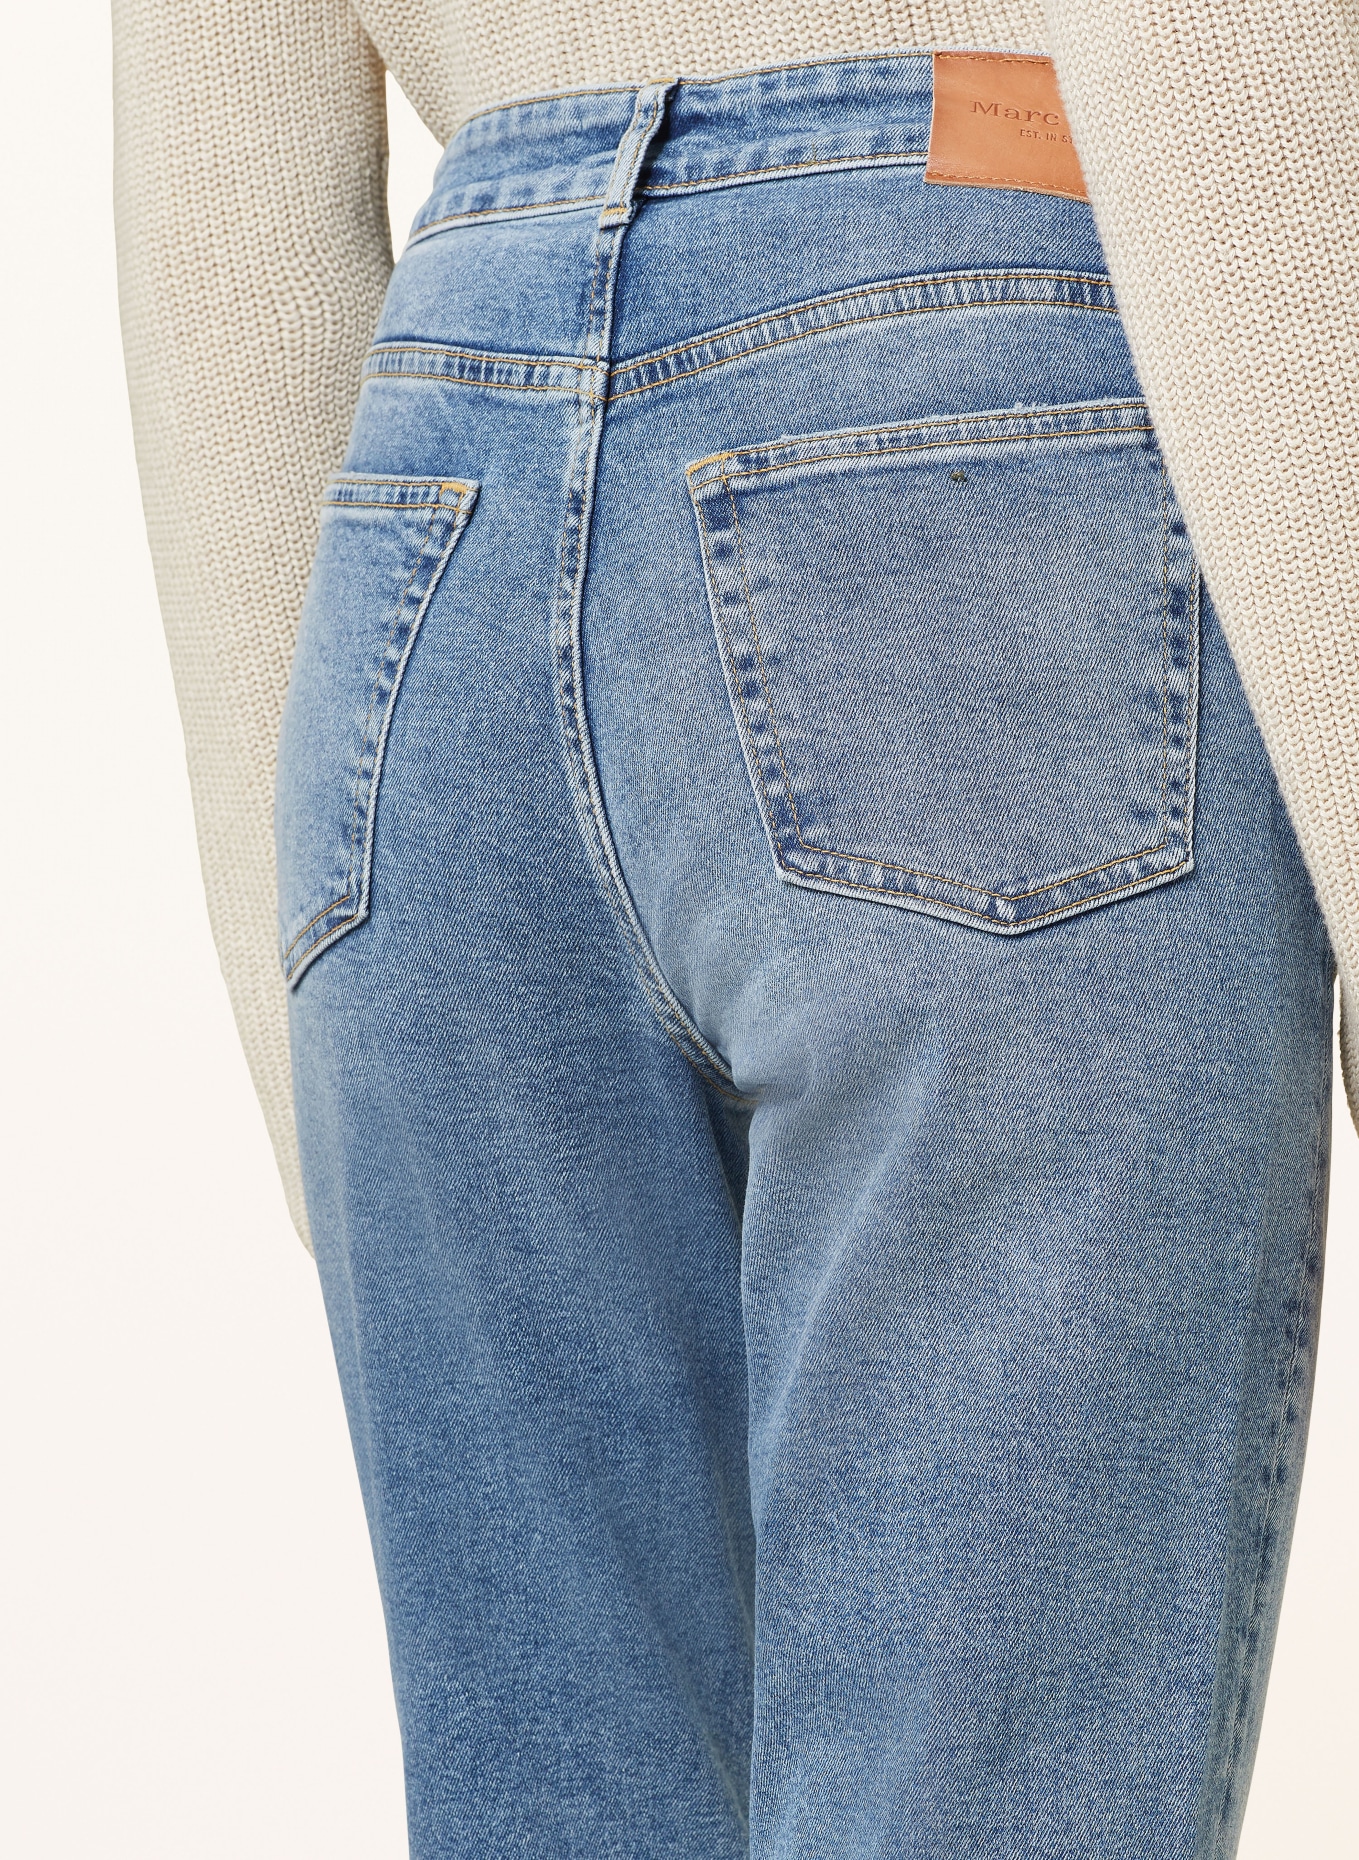 Marc O'Polo 7/8-Jeans MALA, Farbe: 037 Mid authentic wash with grindi (Bild 5)